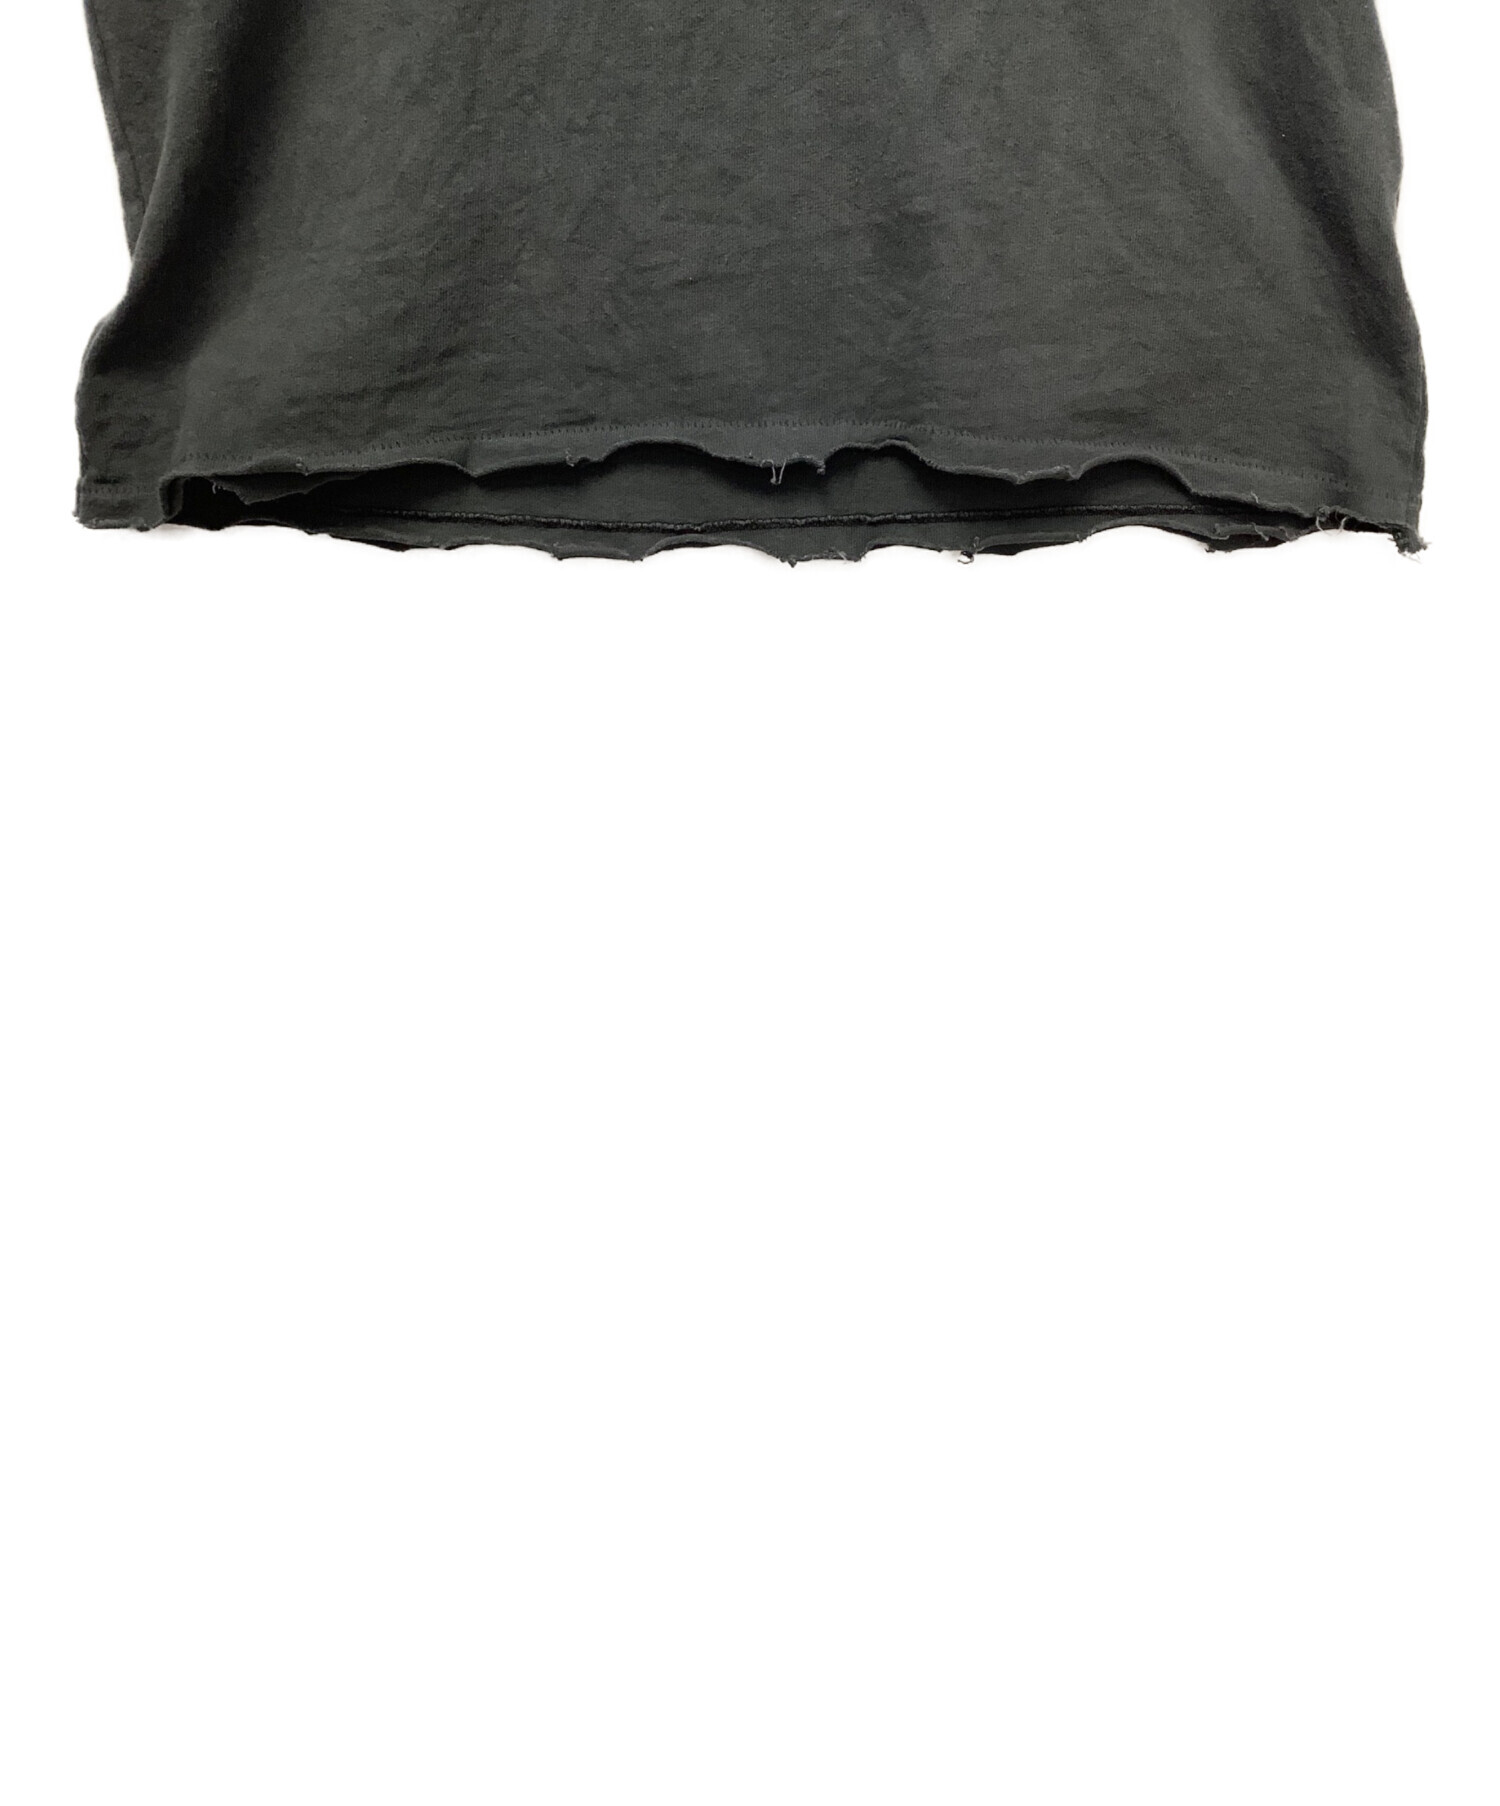 askyurself (アスクユアセルフ) 半袖Tシャツ ブラック サイズ:XL